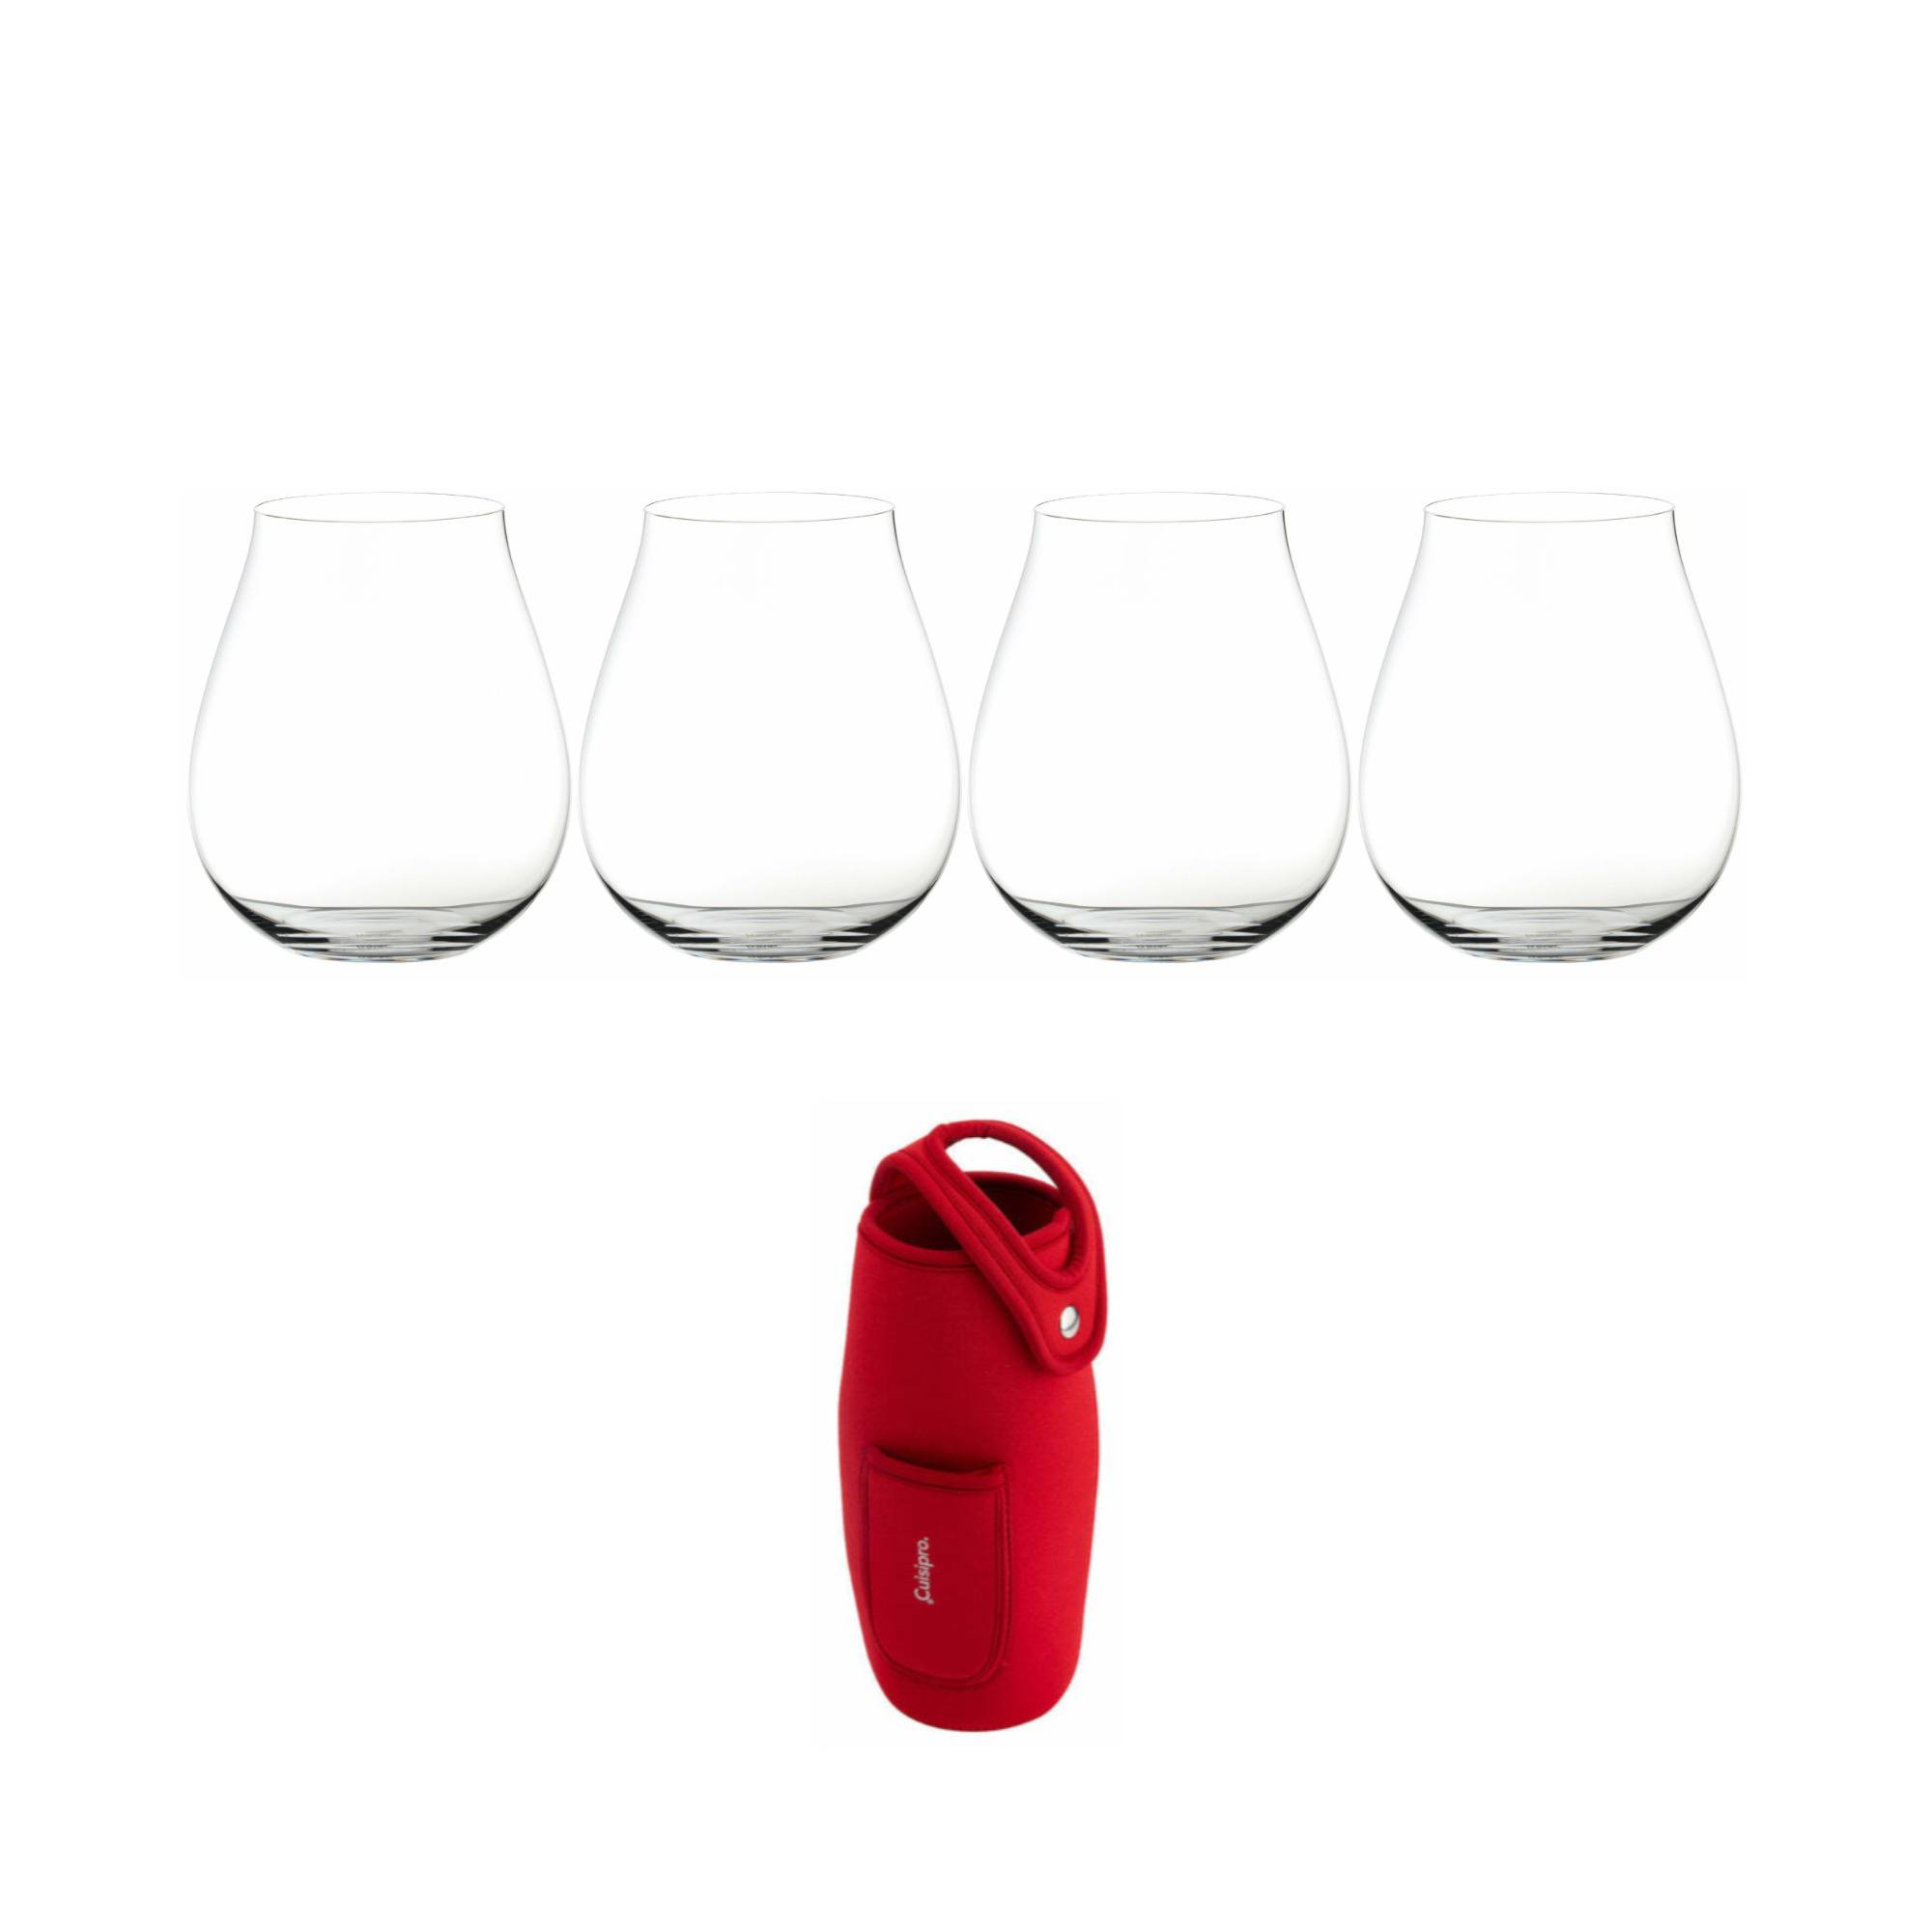 Riedel Gin Tumbler Set (4-pack) Bundle with Drink Grip Wine Bottle Holder (Red)